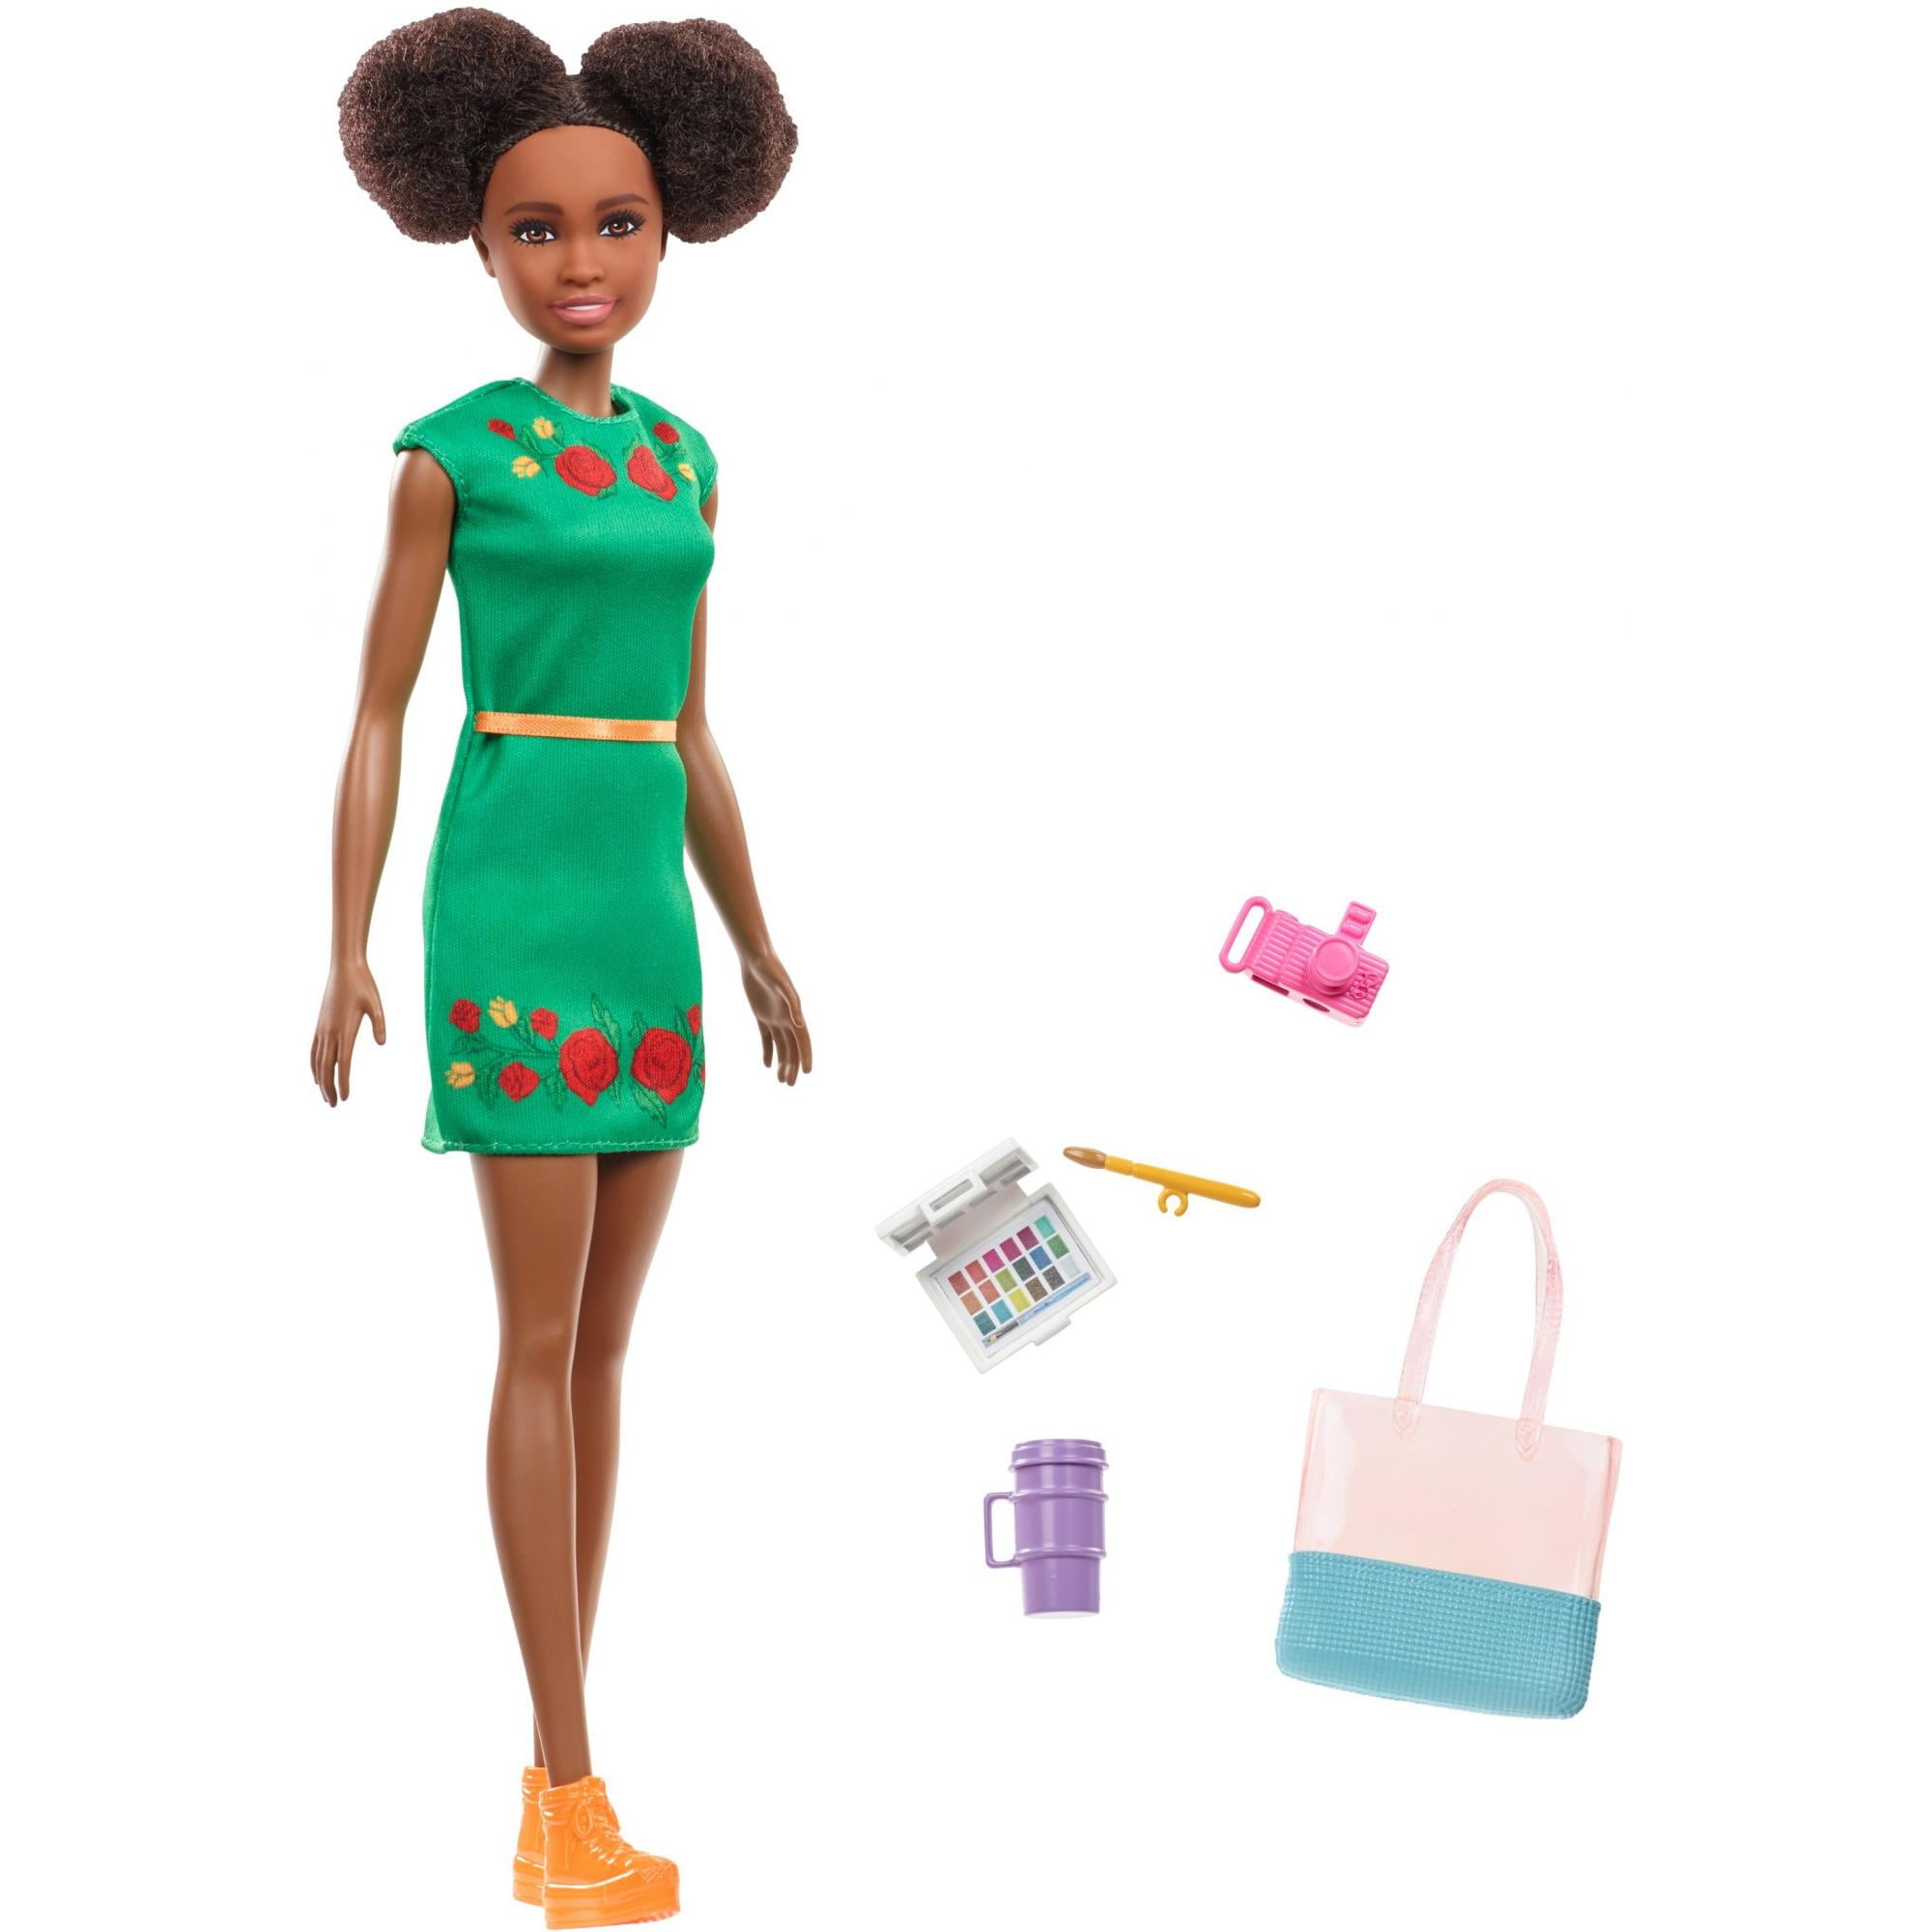 Barbie Nikki Travel Doll with 5 TouristThemed Accessories